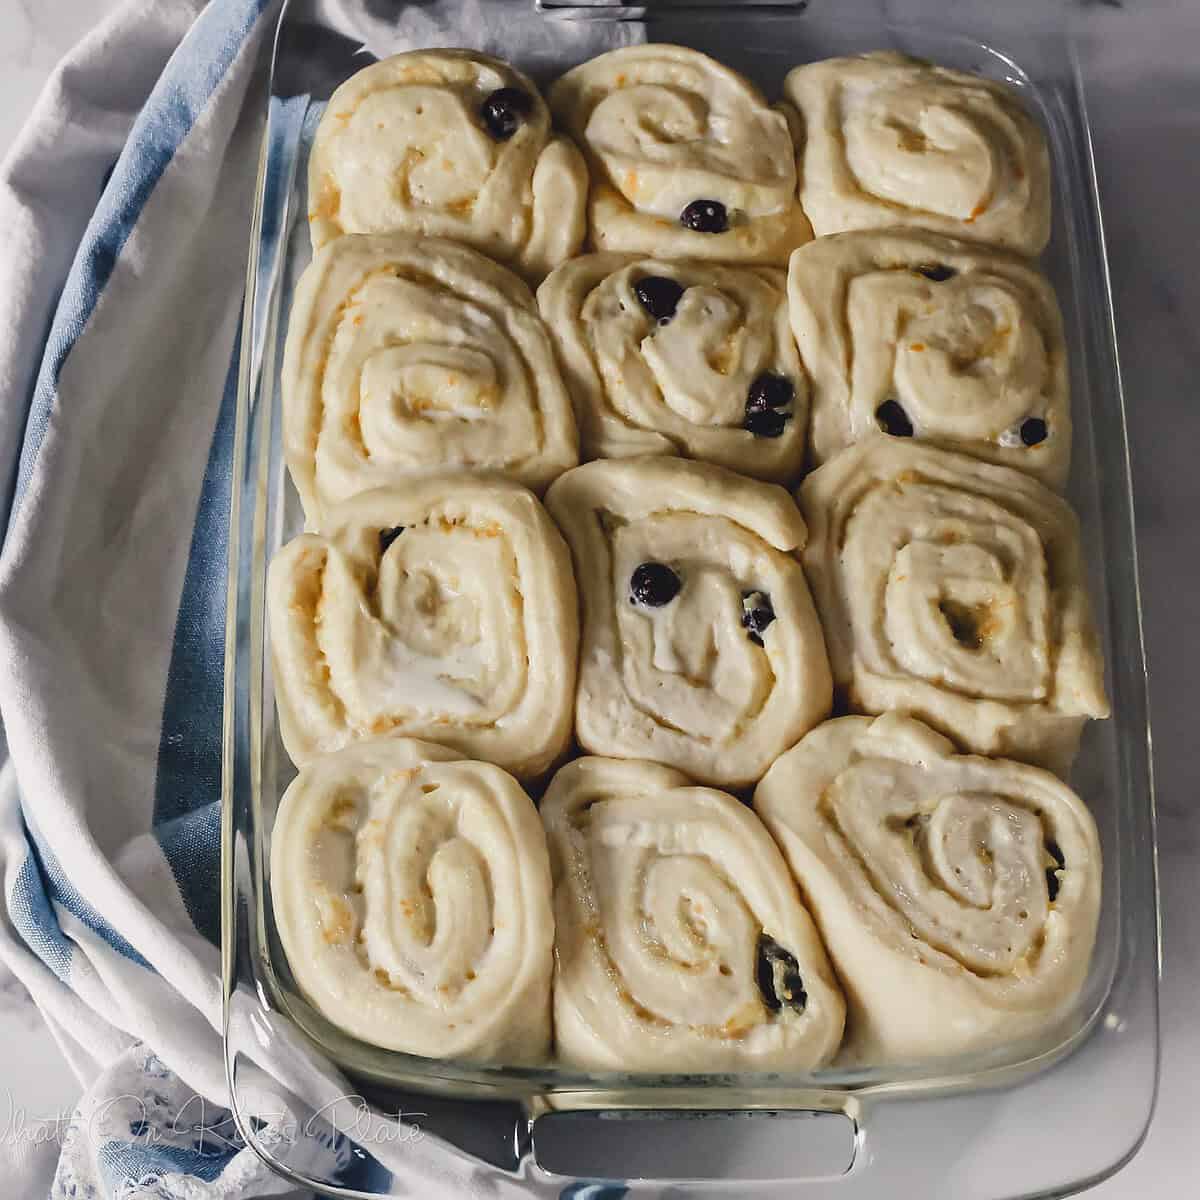 Grandma’s Sweet Roll Dough